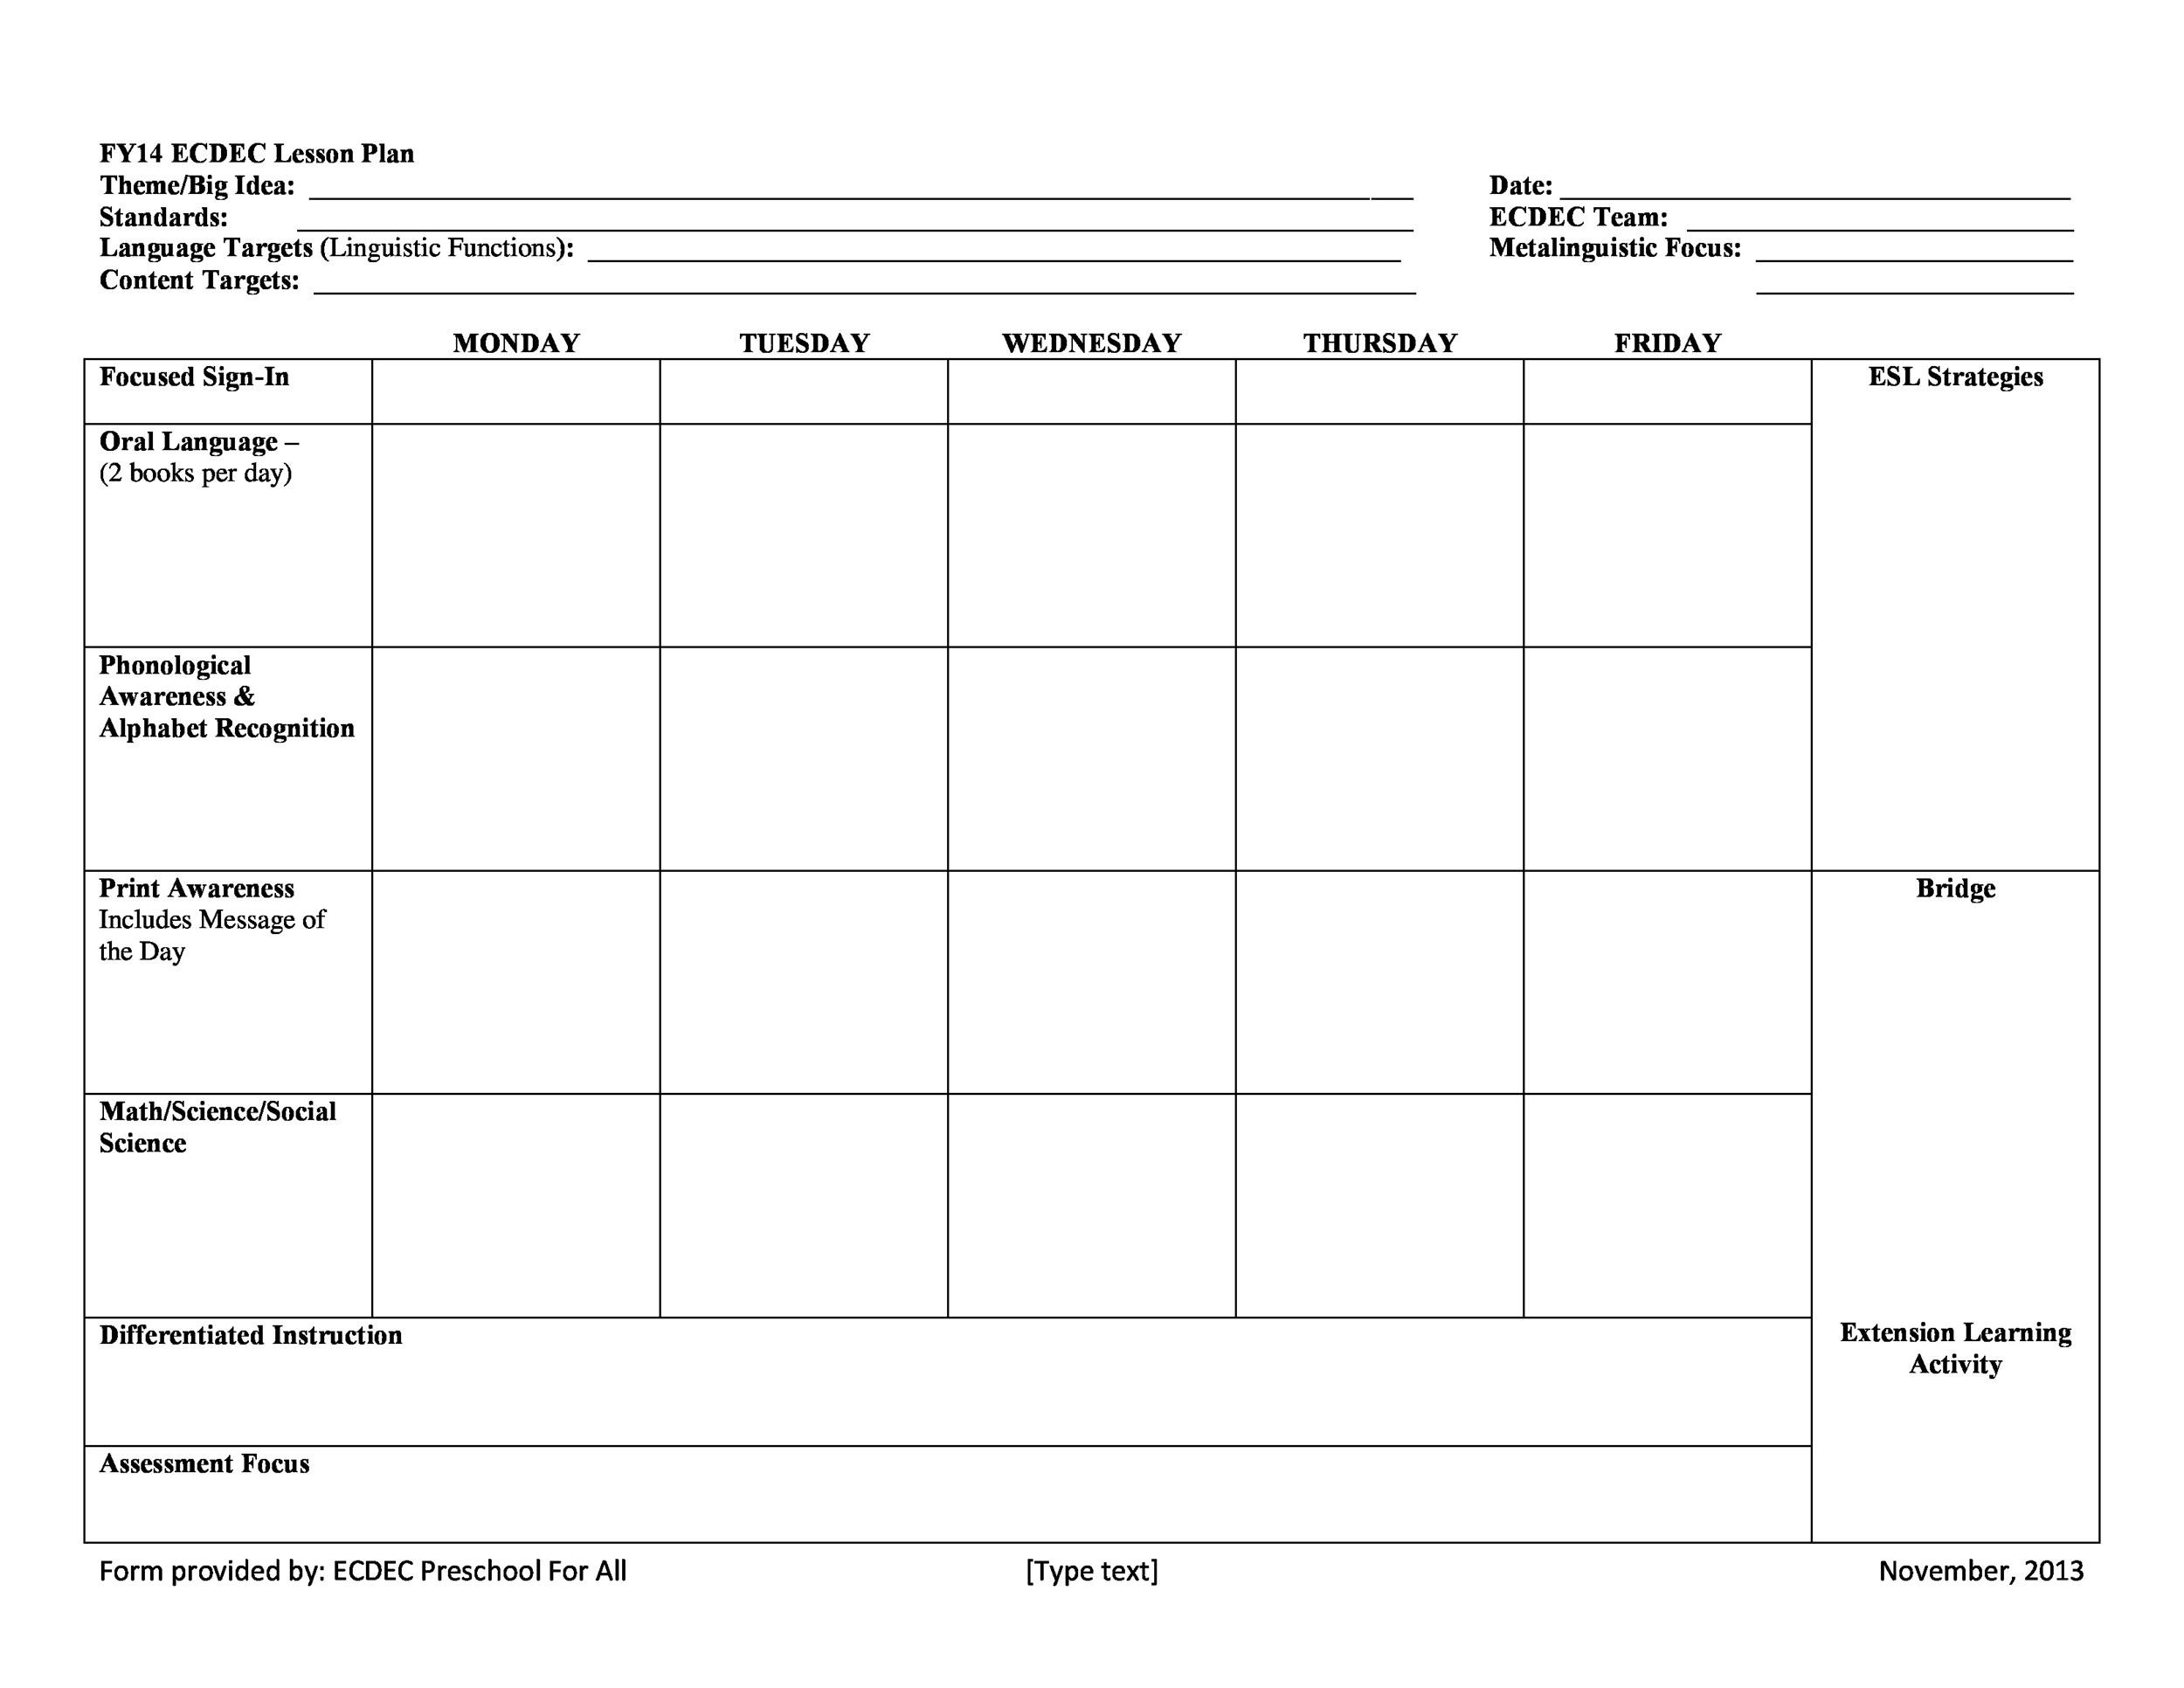 Free Editable Lesson Plan Template 44 Free Lesson Plan Templates [ Mon Core Preschool Weekly]